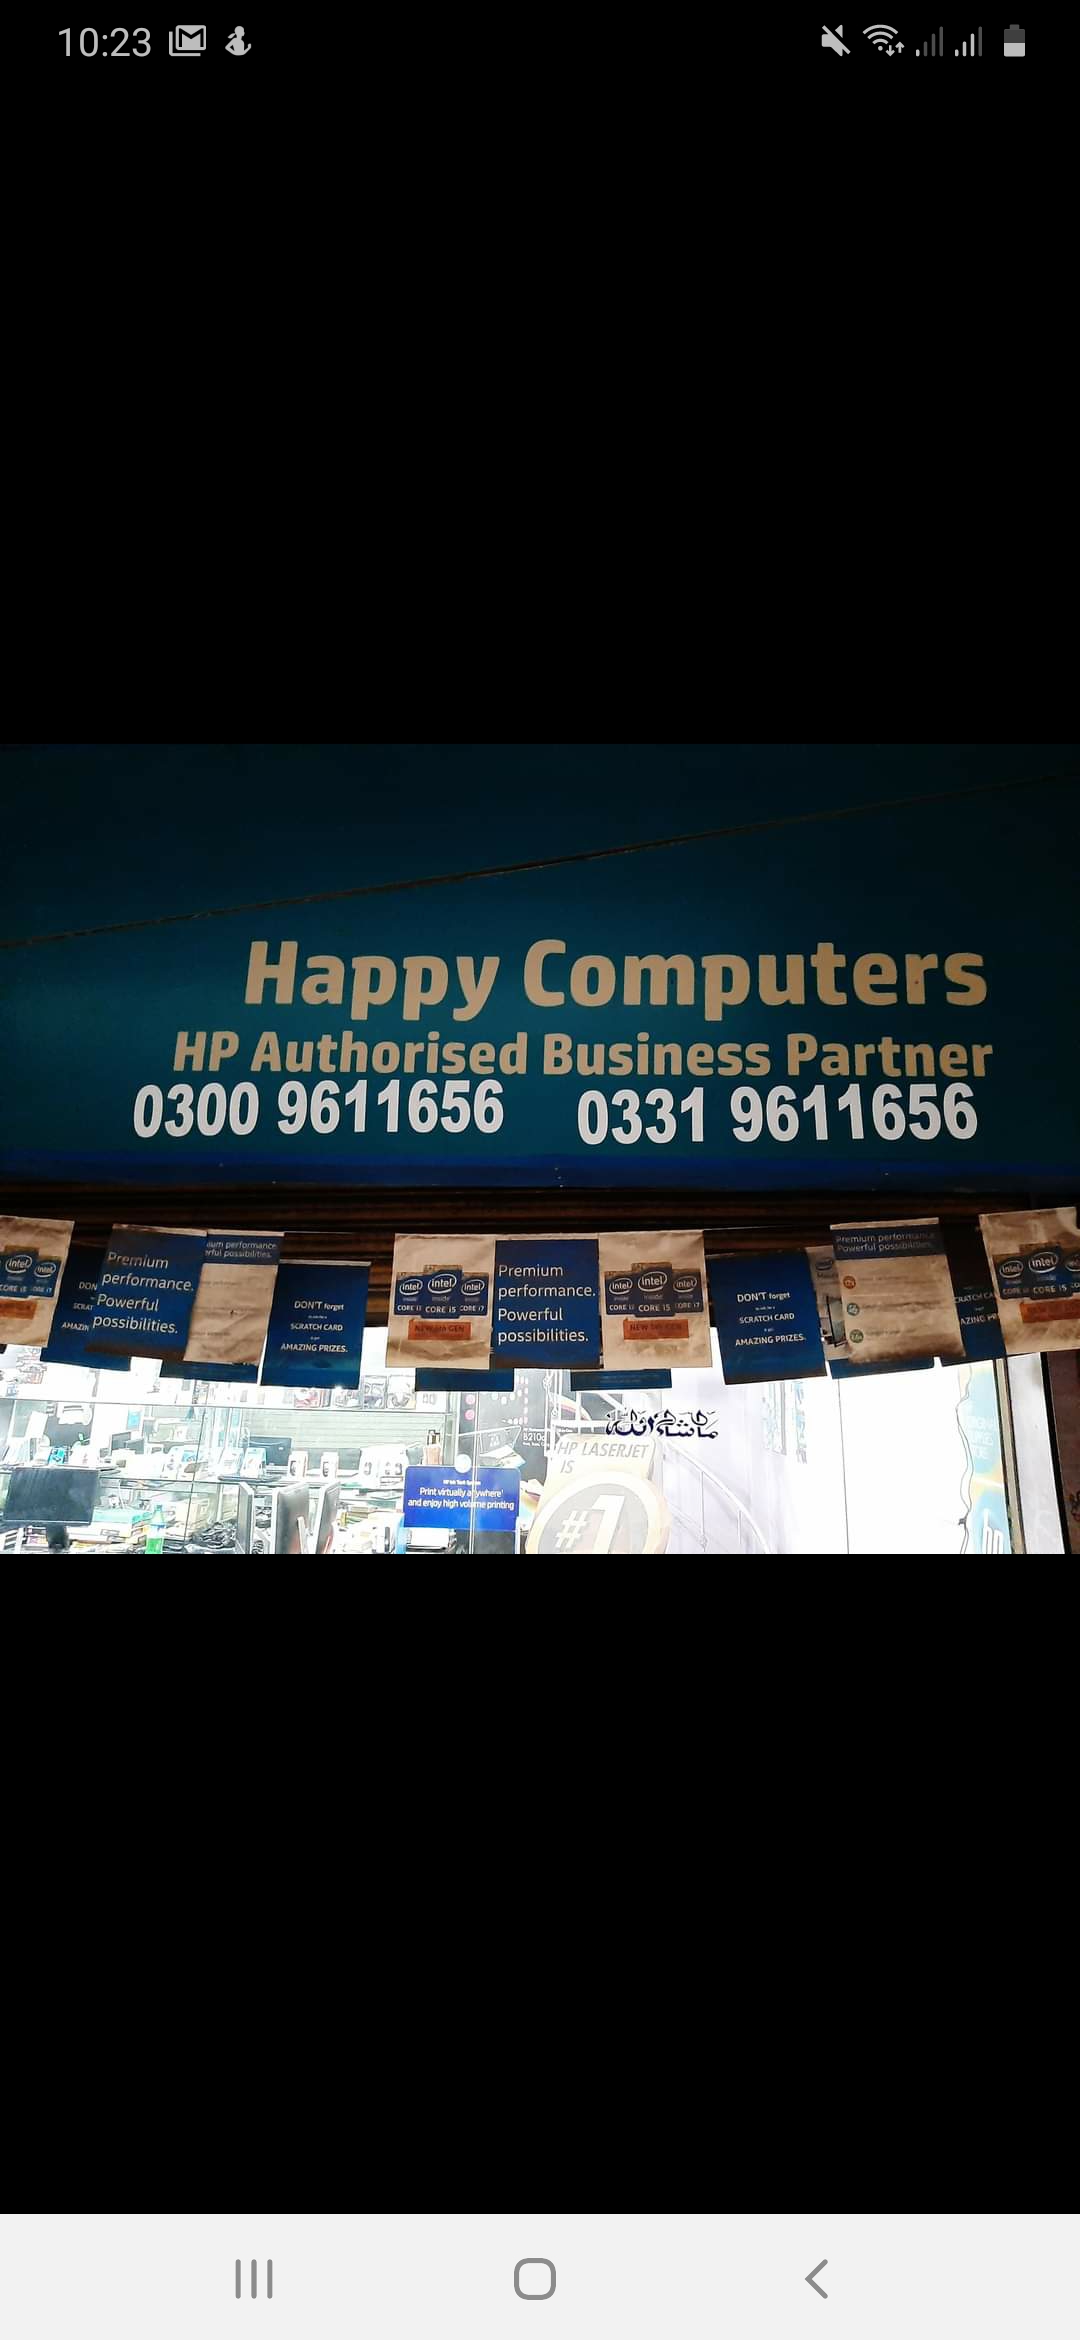 Happy Computers